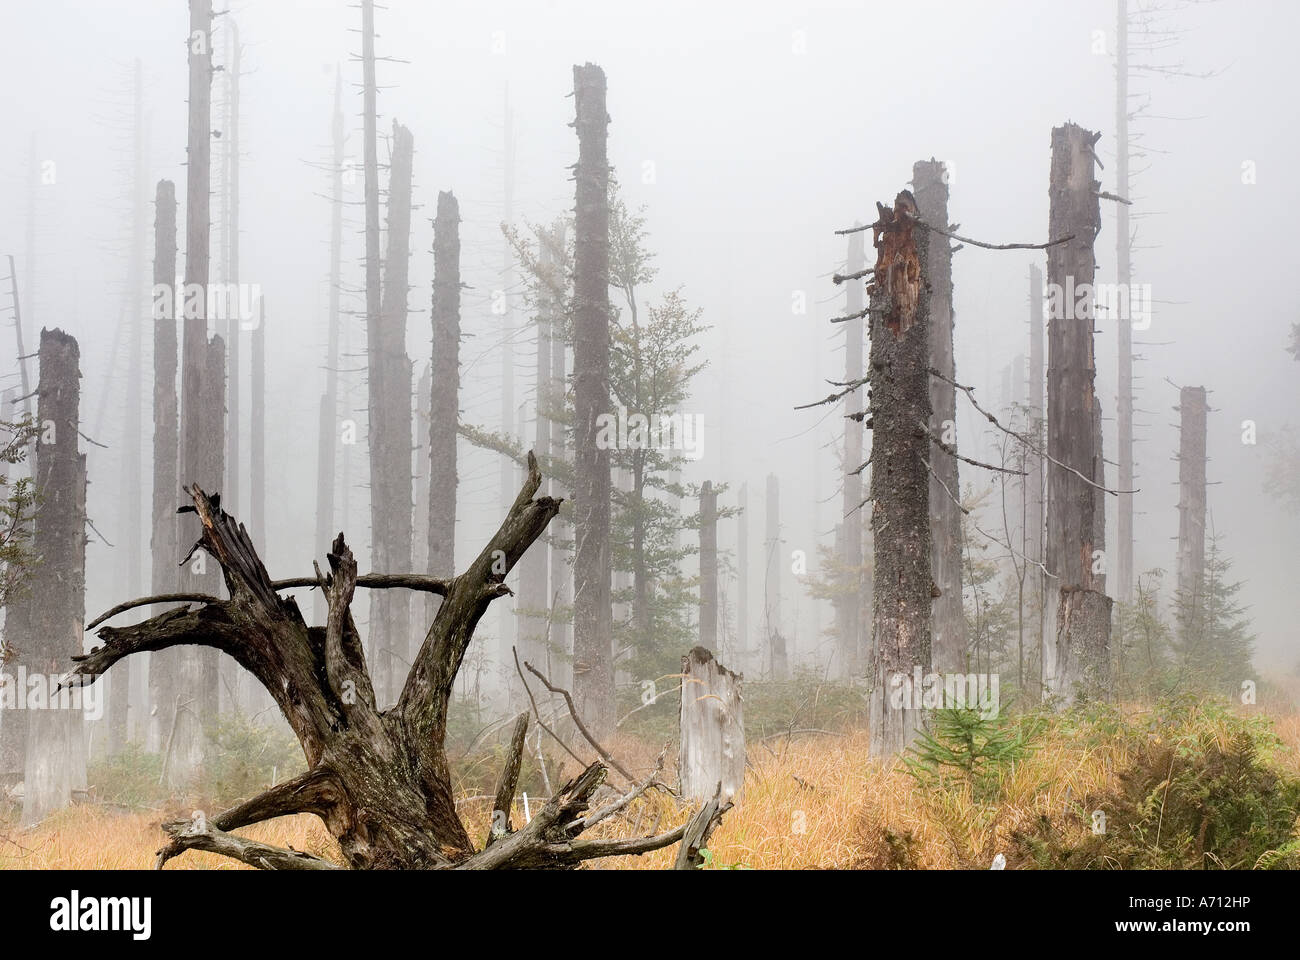 forest damaged by bark beetle / Ips typographus Stock Photo